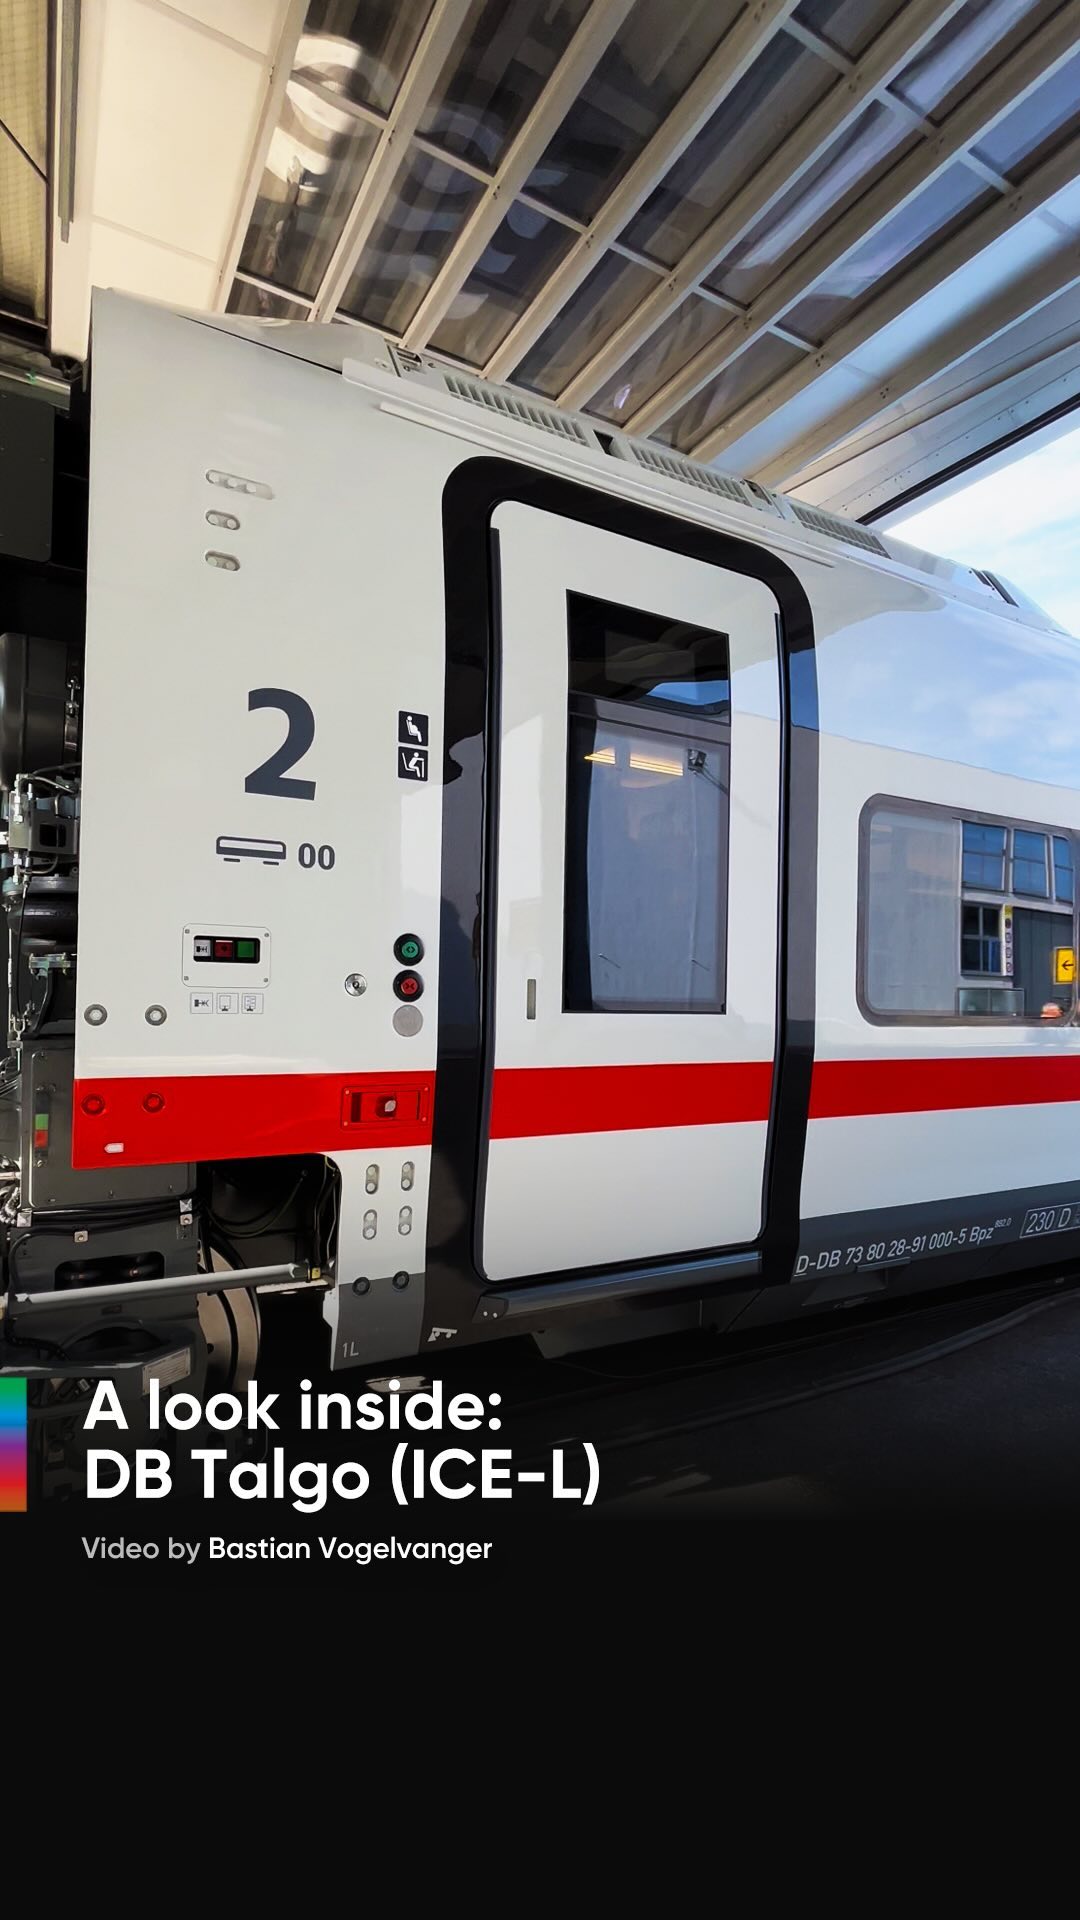 Take a look inside DB’s new Talgo coach! 🇩🇪🇪🇸 What do you think of these new coaches? 
.
.
.
.
#DB #DeutscheBahn #talgo #DBtalgo #ICEL #DBICE #ICE #DBICEL #talgo23 #talgotravca #Baureihe105 #br105 #eisenbahn #eisenbahner #bahnvideo #zug #railways_of_europe #railways_of_our_world #railcolor #railcolornews #railways #electriclocomotive #ellok